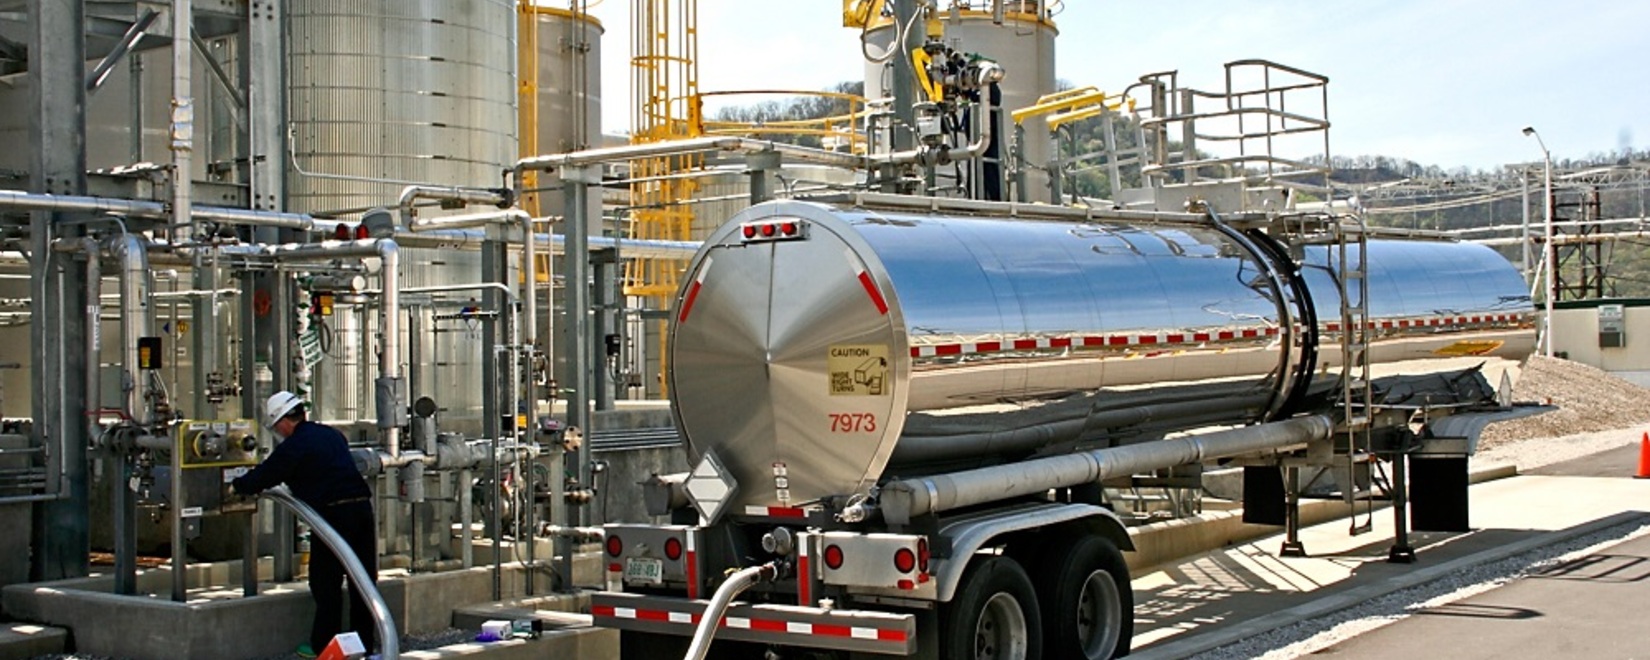 ФАС呼吁石油公司增加向国内市场的燃料供应。